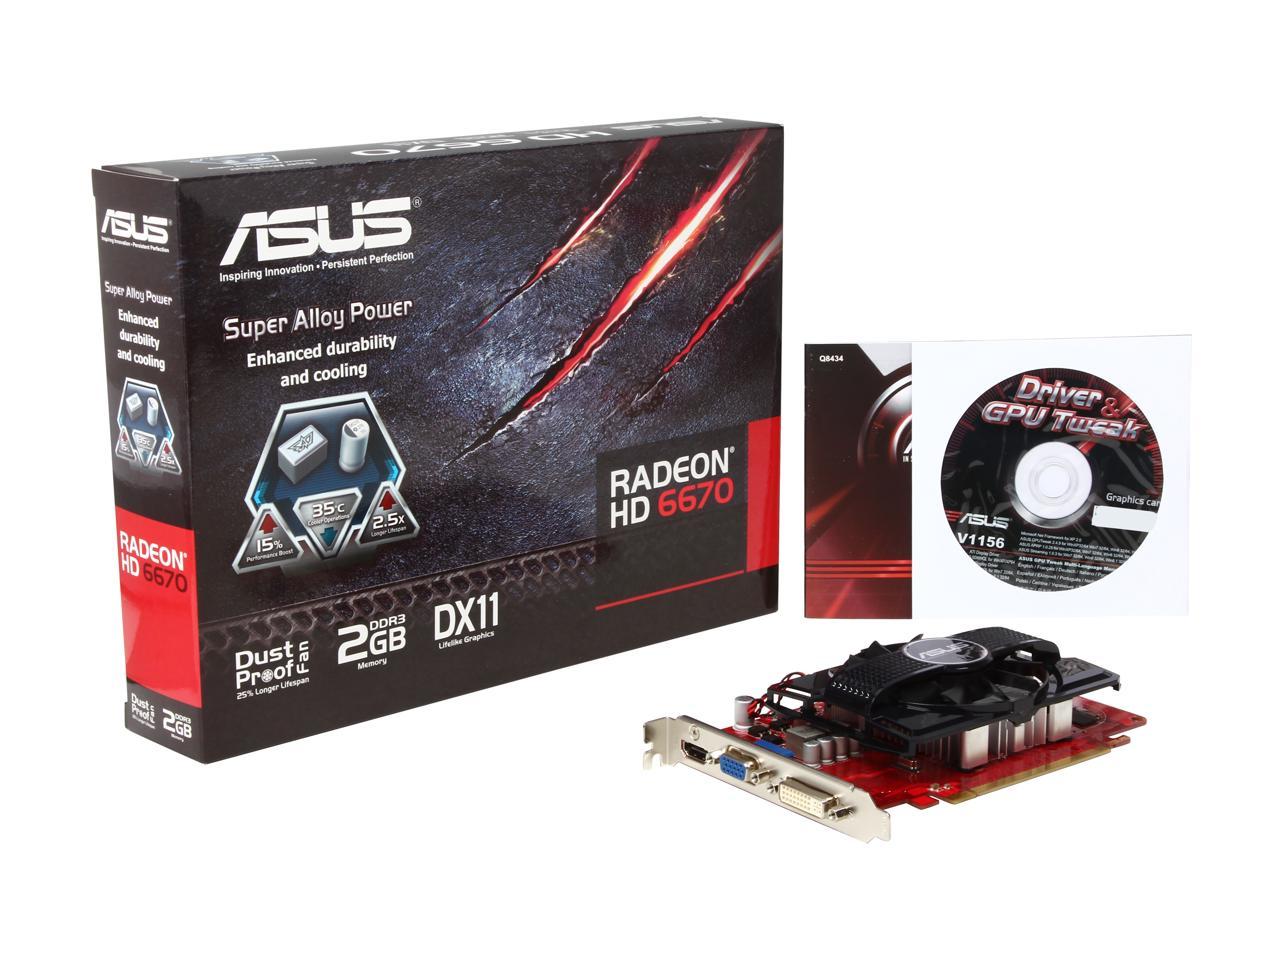 ASUS Radeon HD 6670 DirectX 11 HD6670-2GD3 Video Card - Newegg.com